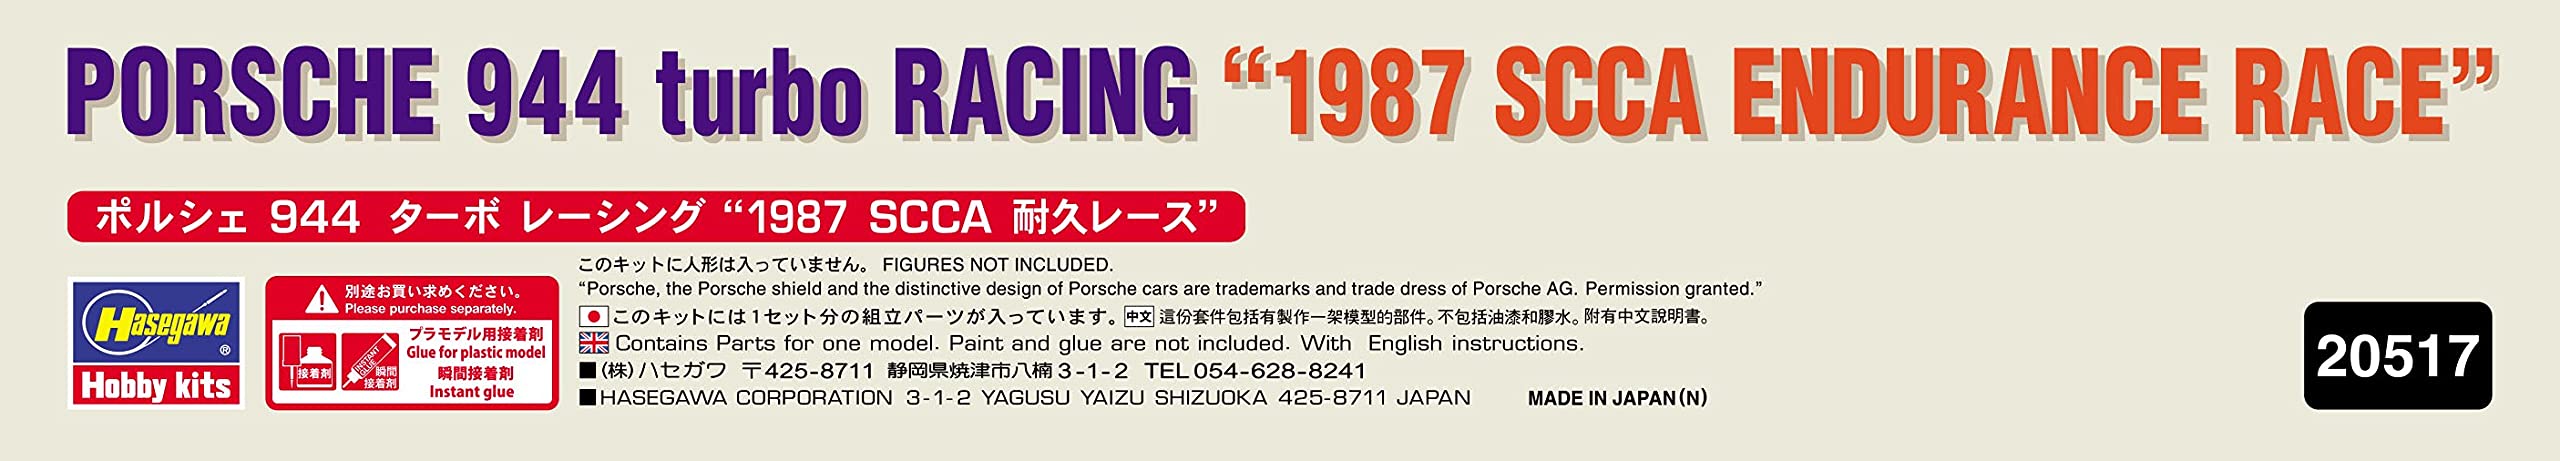 Hasegawa 1/24 PORSCHE 944 turbo RACING 1987 SCCA ENDURANCE RACE kit 20517 NEW_4